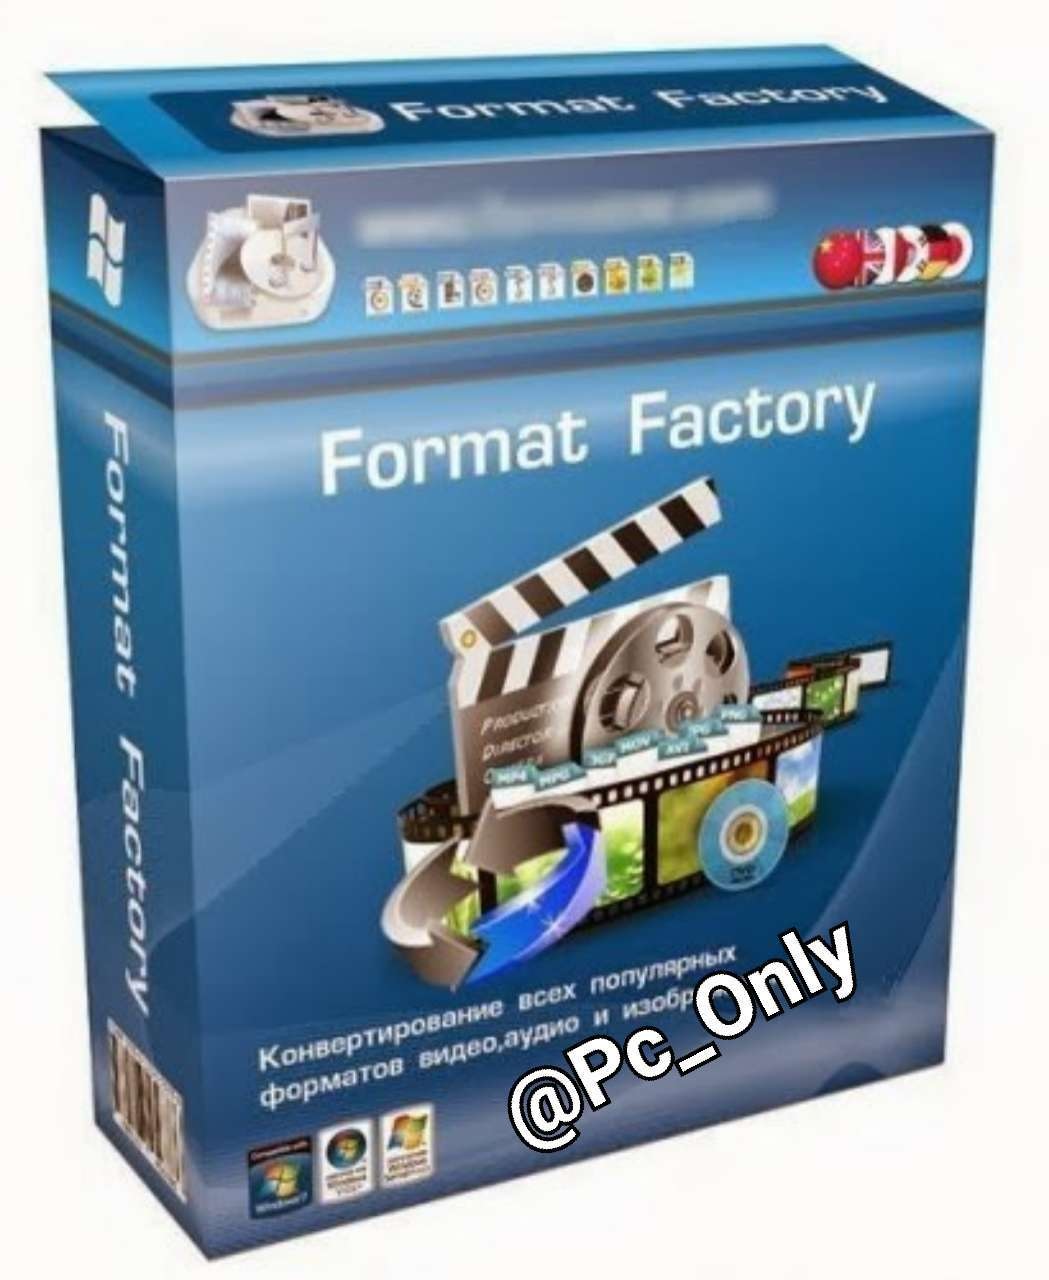 Format Factory Software full setup free Download